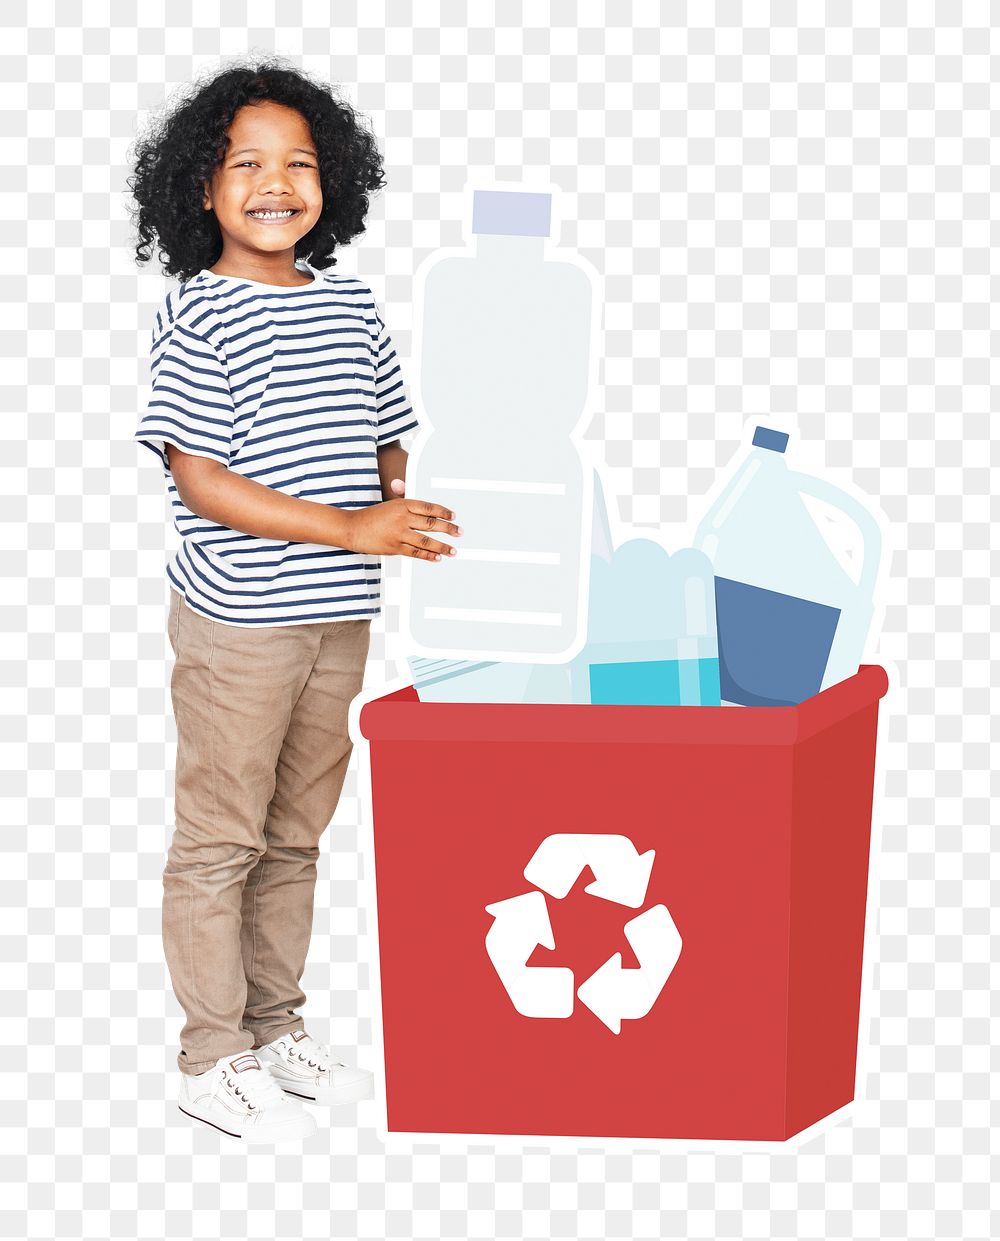 Png boy recycling plastic bottles, transparent background